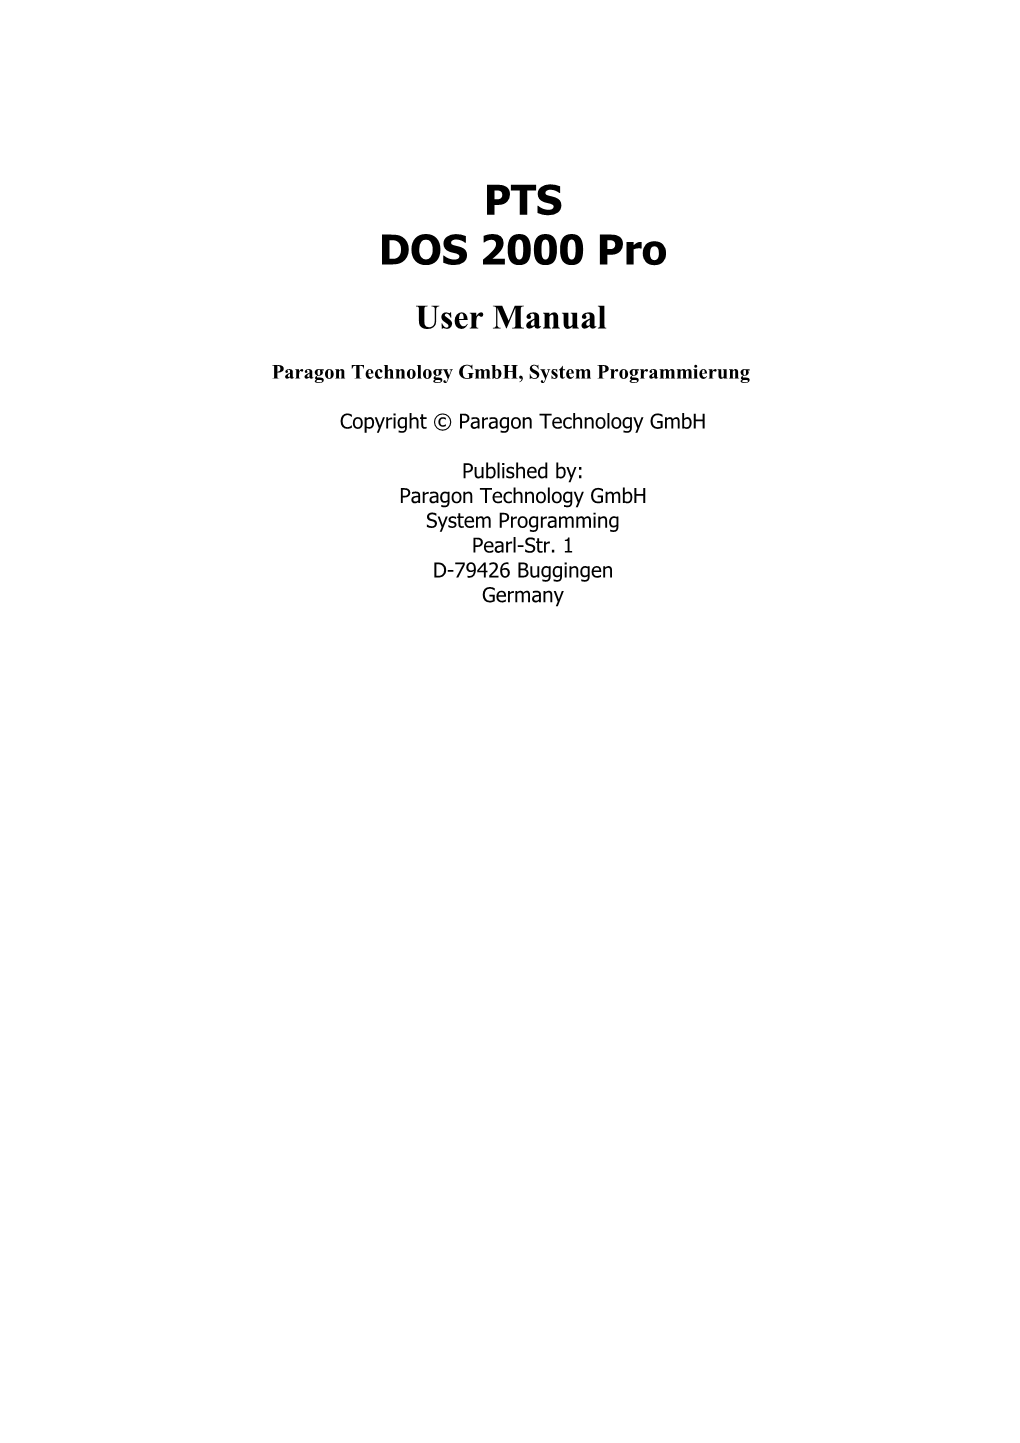 PTS DOS 2000 Pro